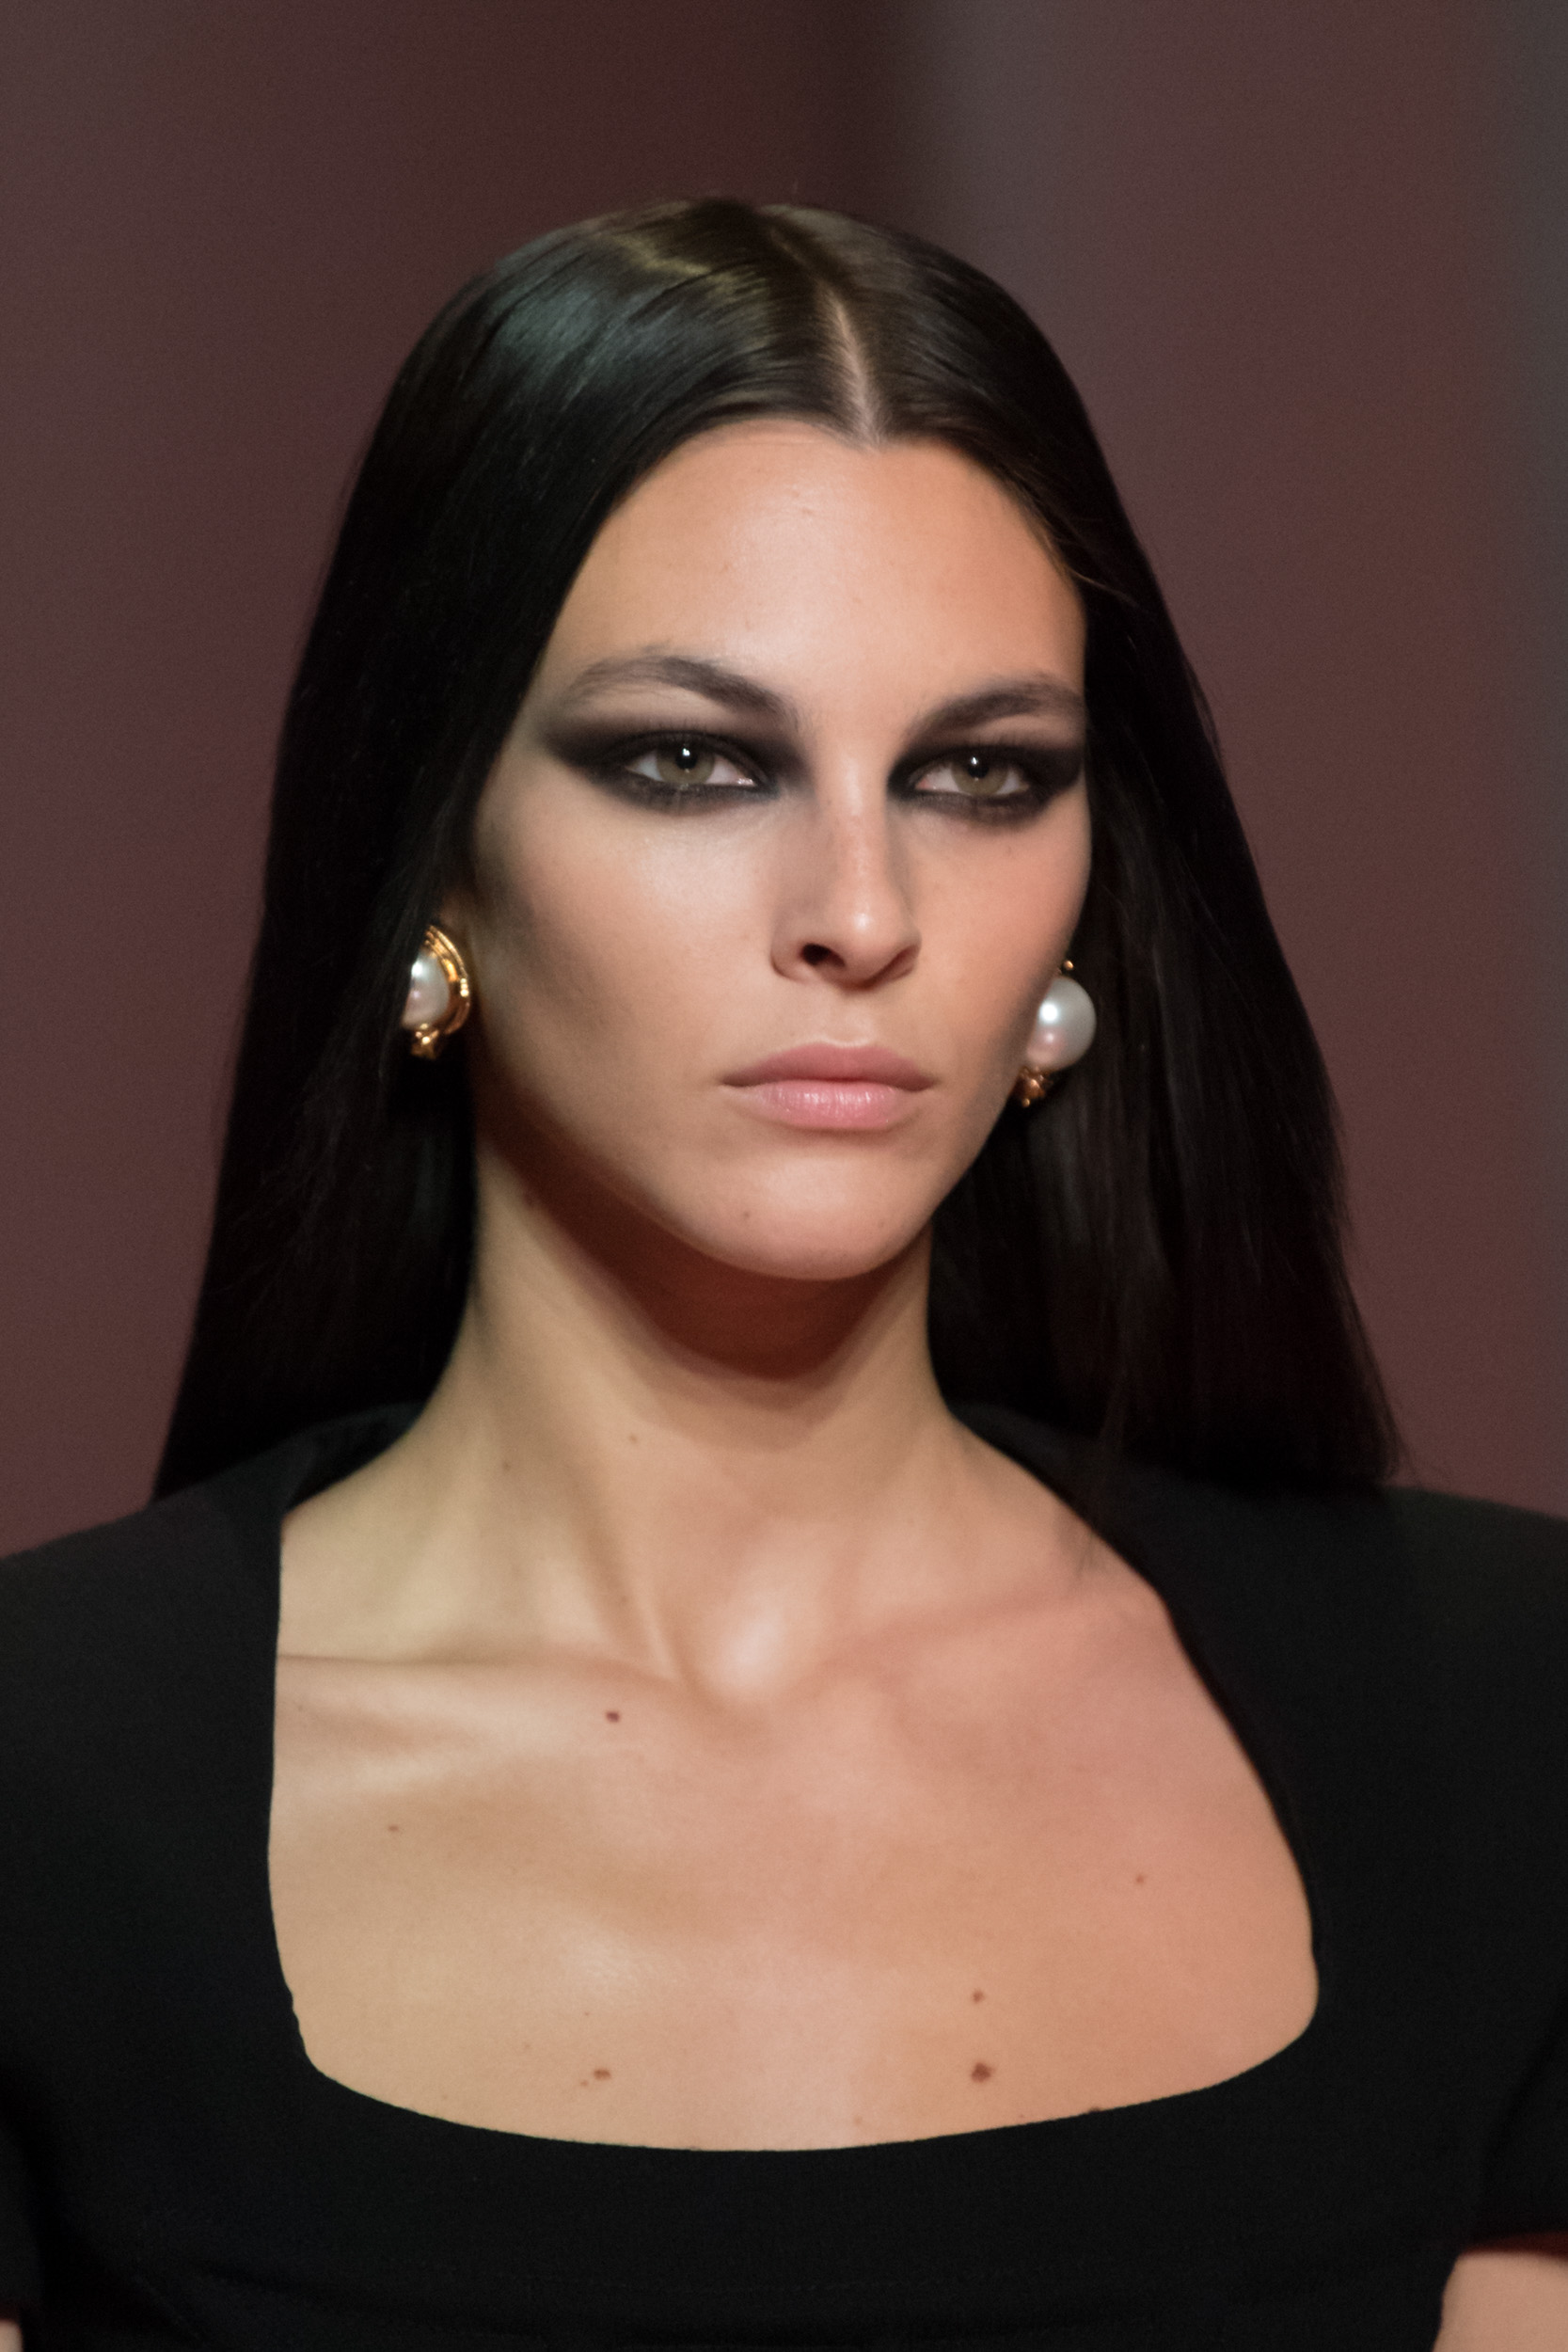 Versace Fall 2022 Fashion Show Details Fashion Show